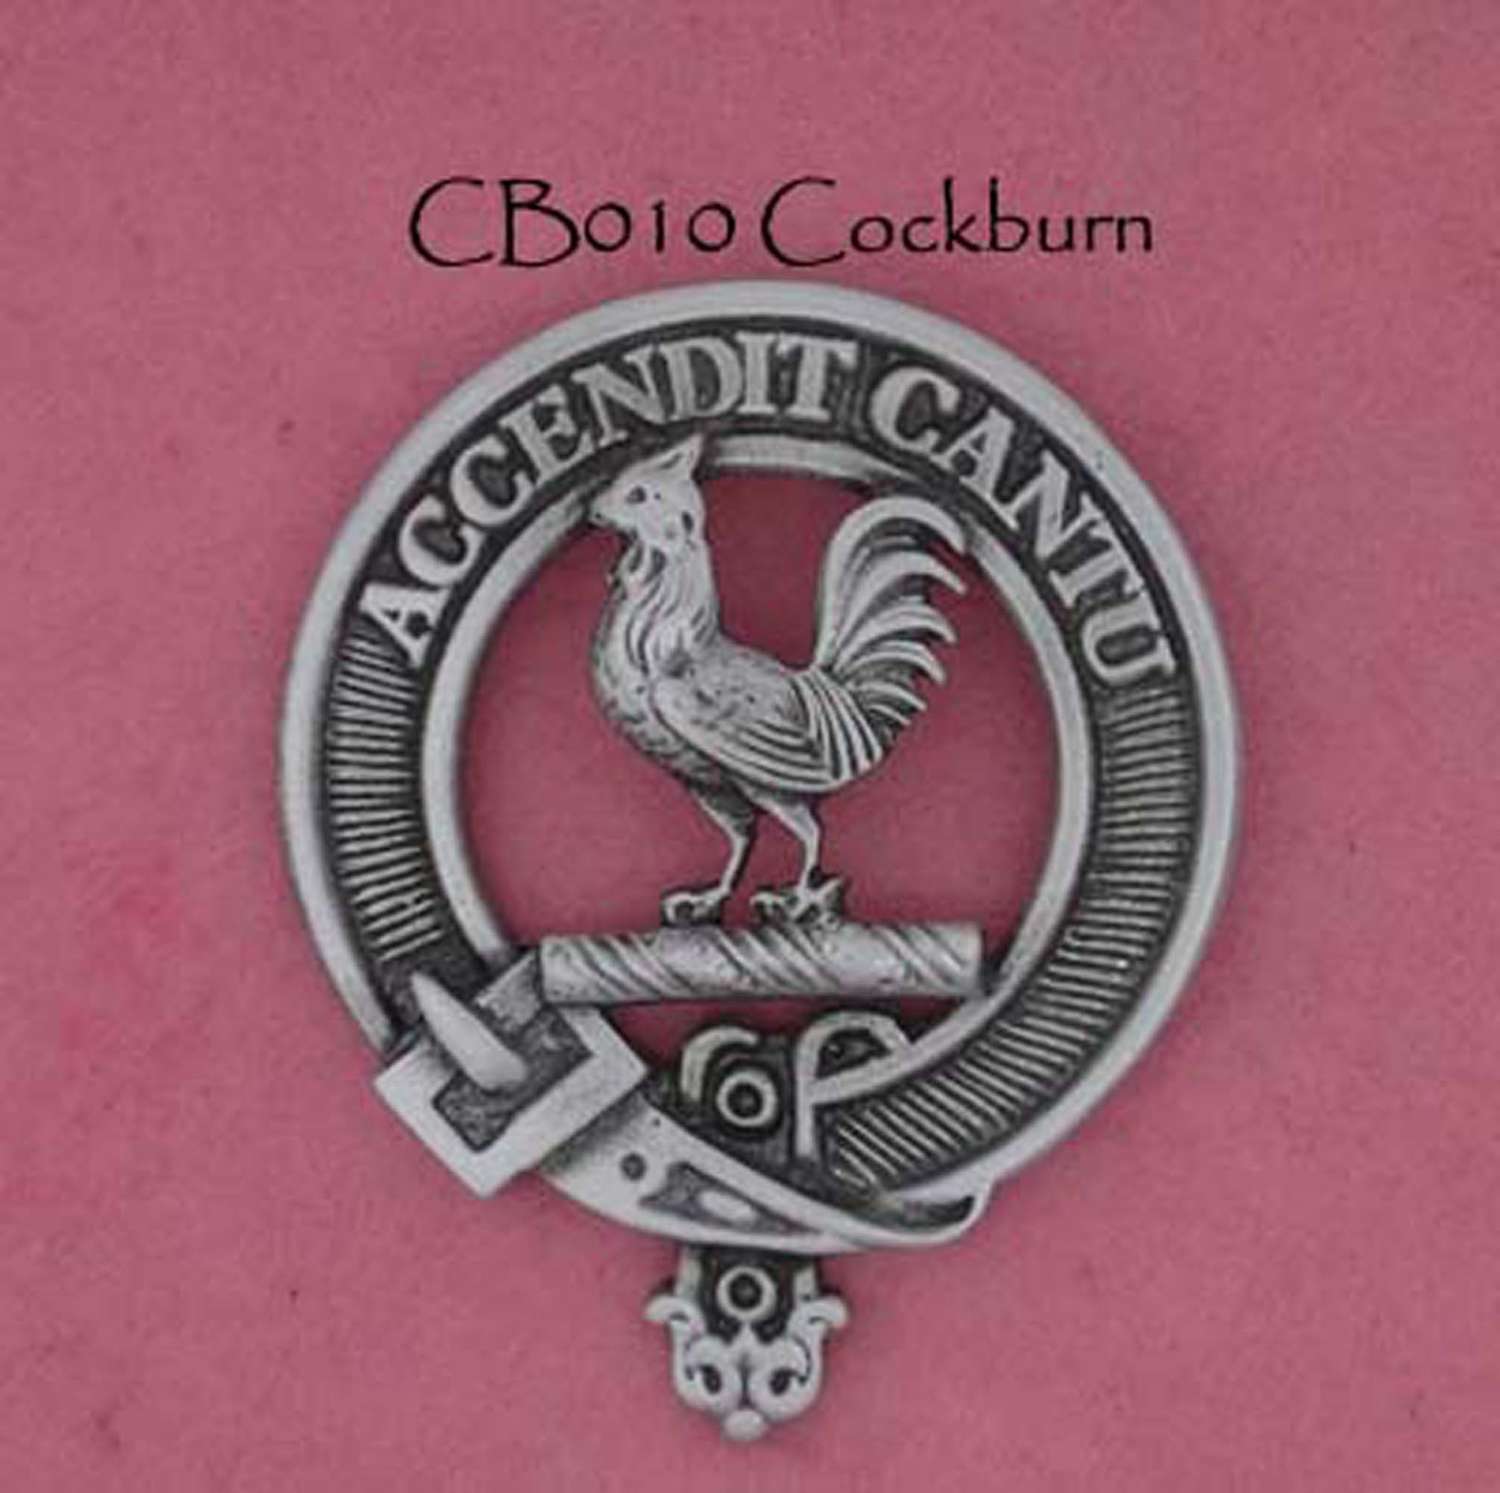 CB010 Cockburn